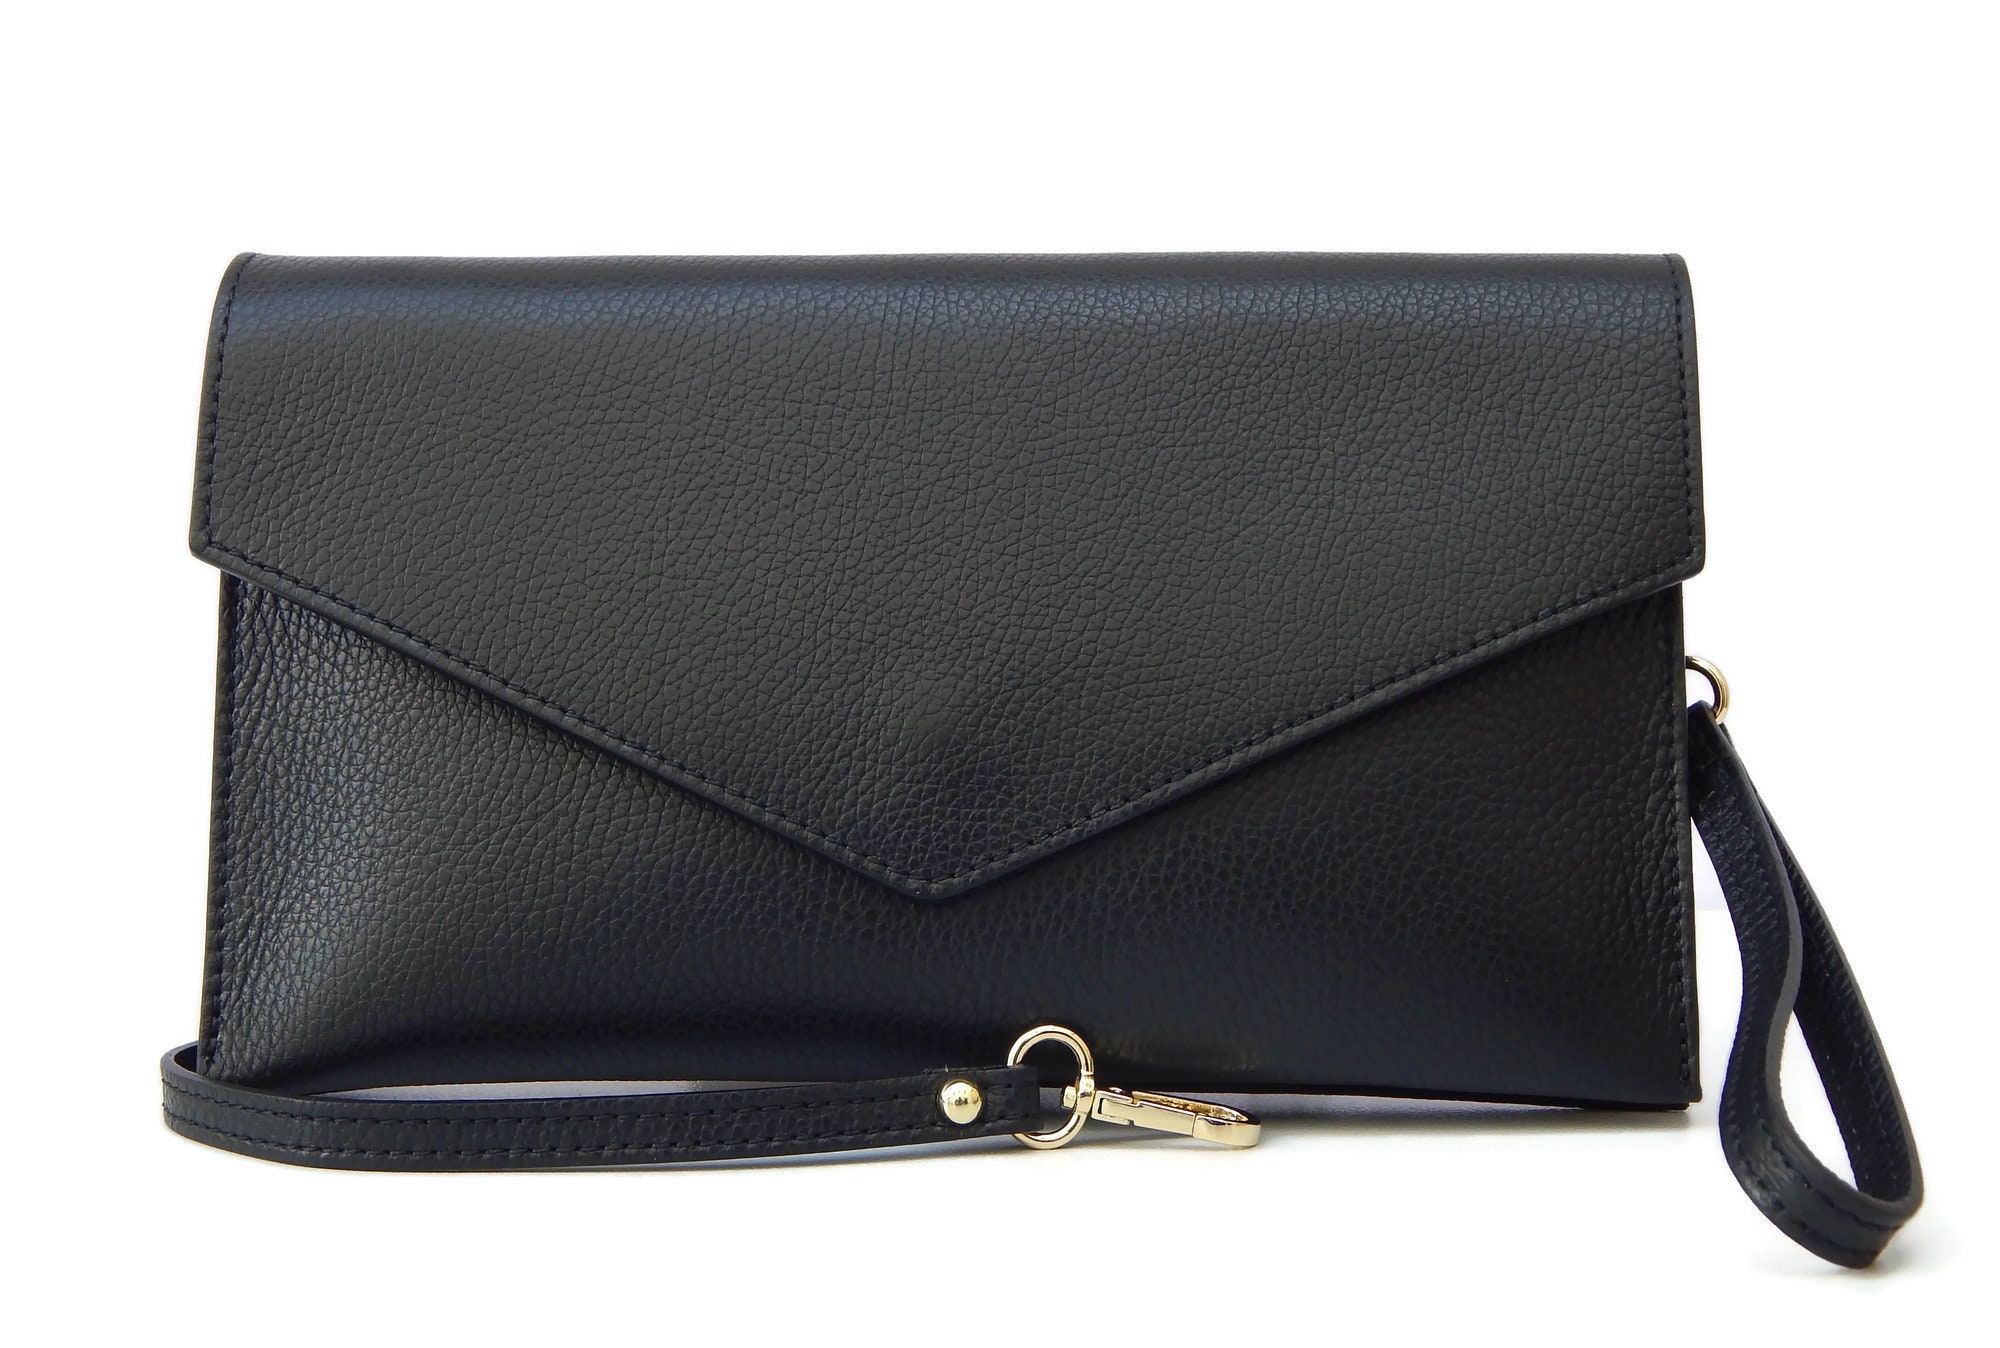 Red Leather Clutch Bag Envelope Style Leather Handbag | Etsy